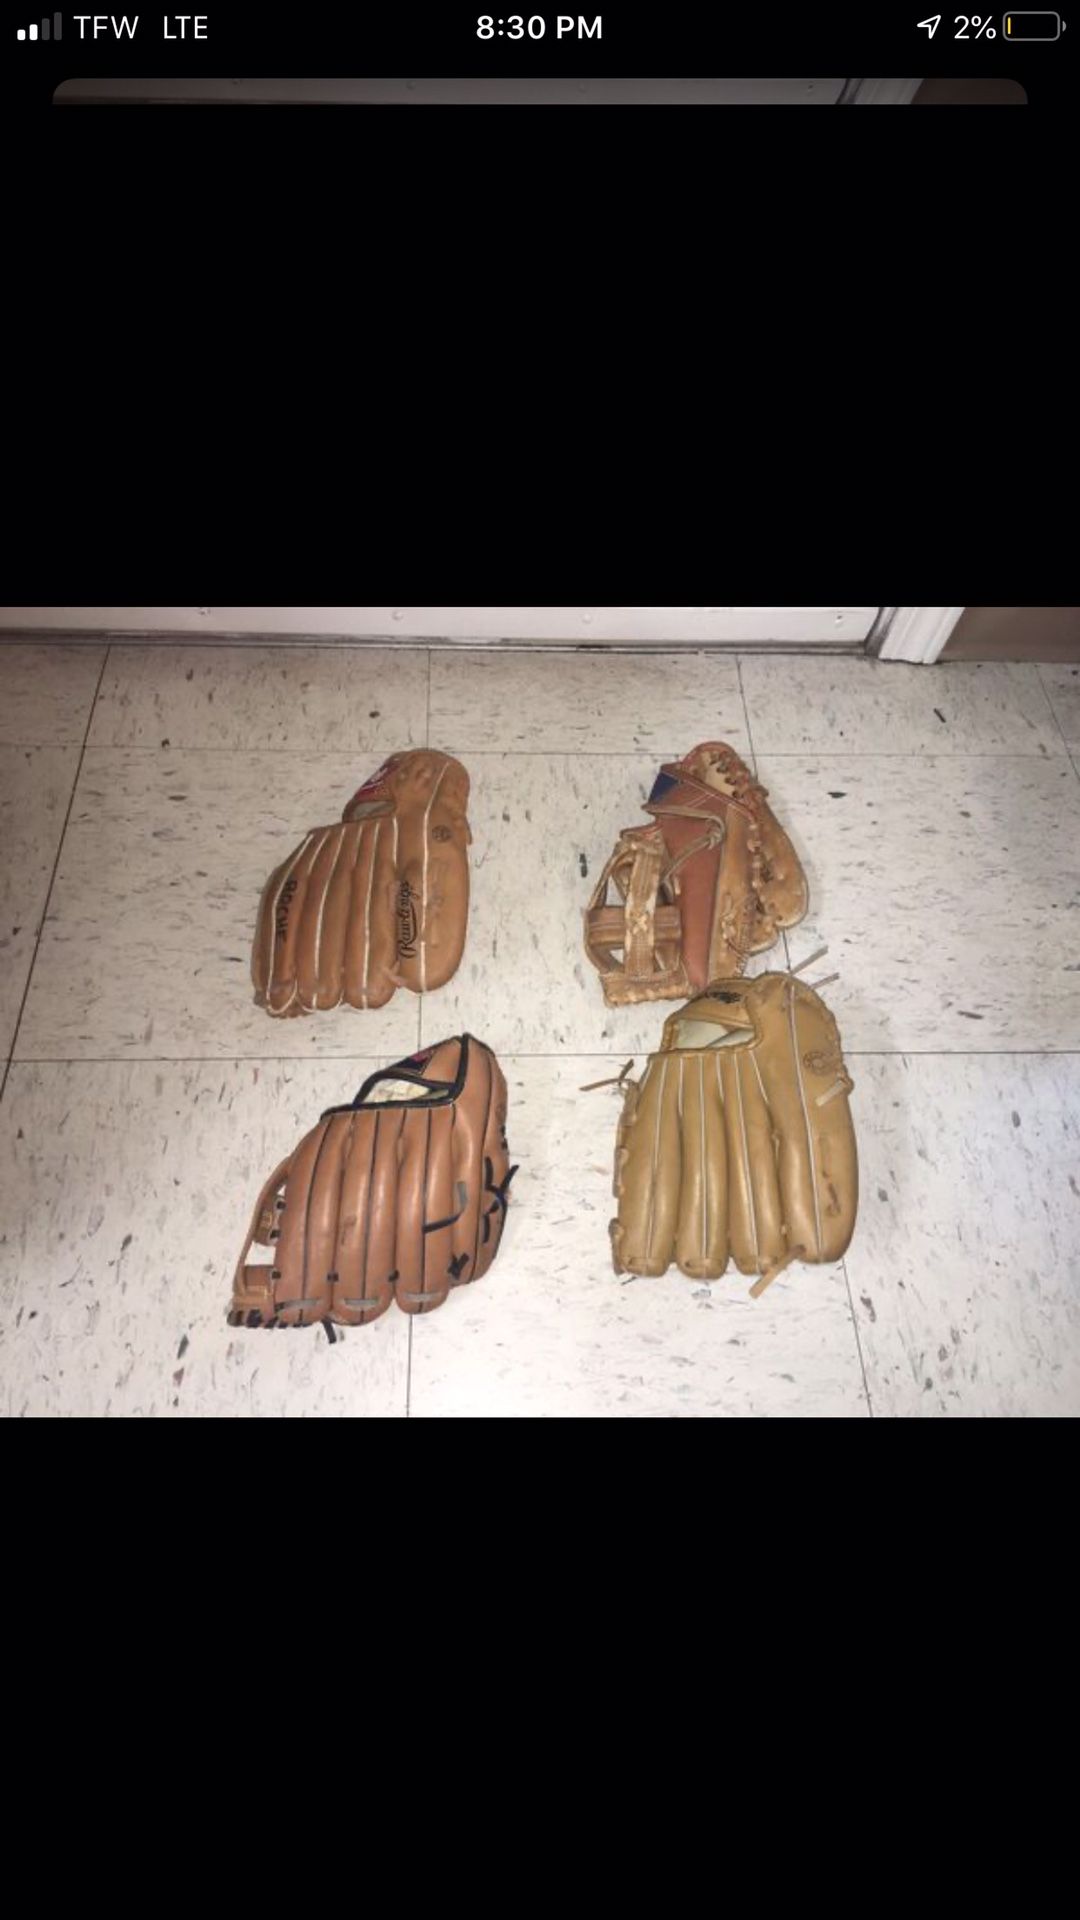 4 slightly used Kids Baseball gloves (2 Left handed 2 Right handed )$8 apiece all for $25